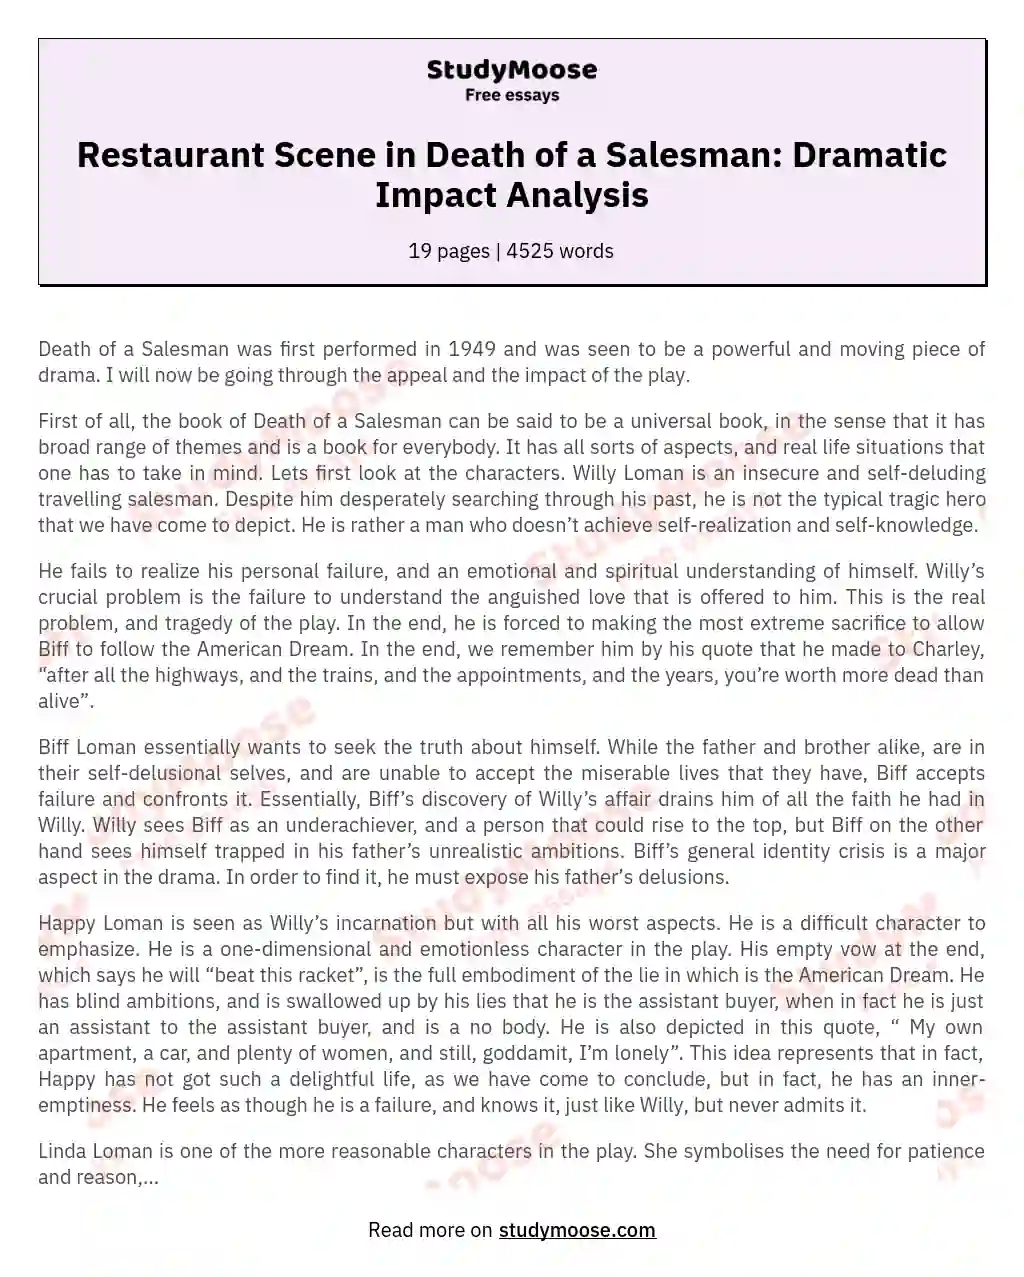 Restaurant Scene in Death of a Salesman: Dramatic Impact Analysis essay